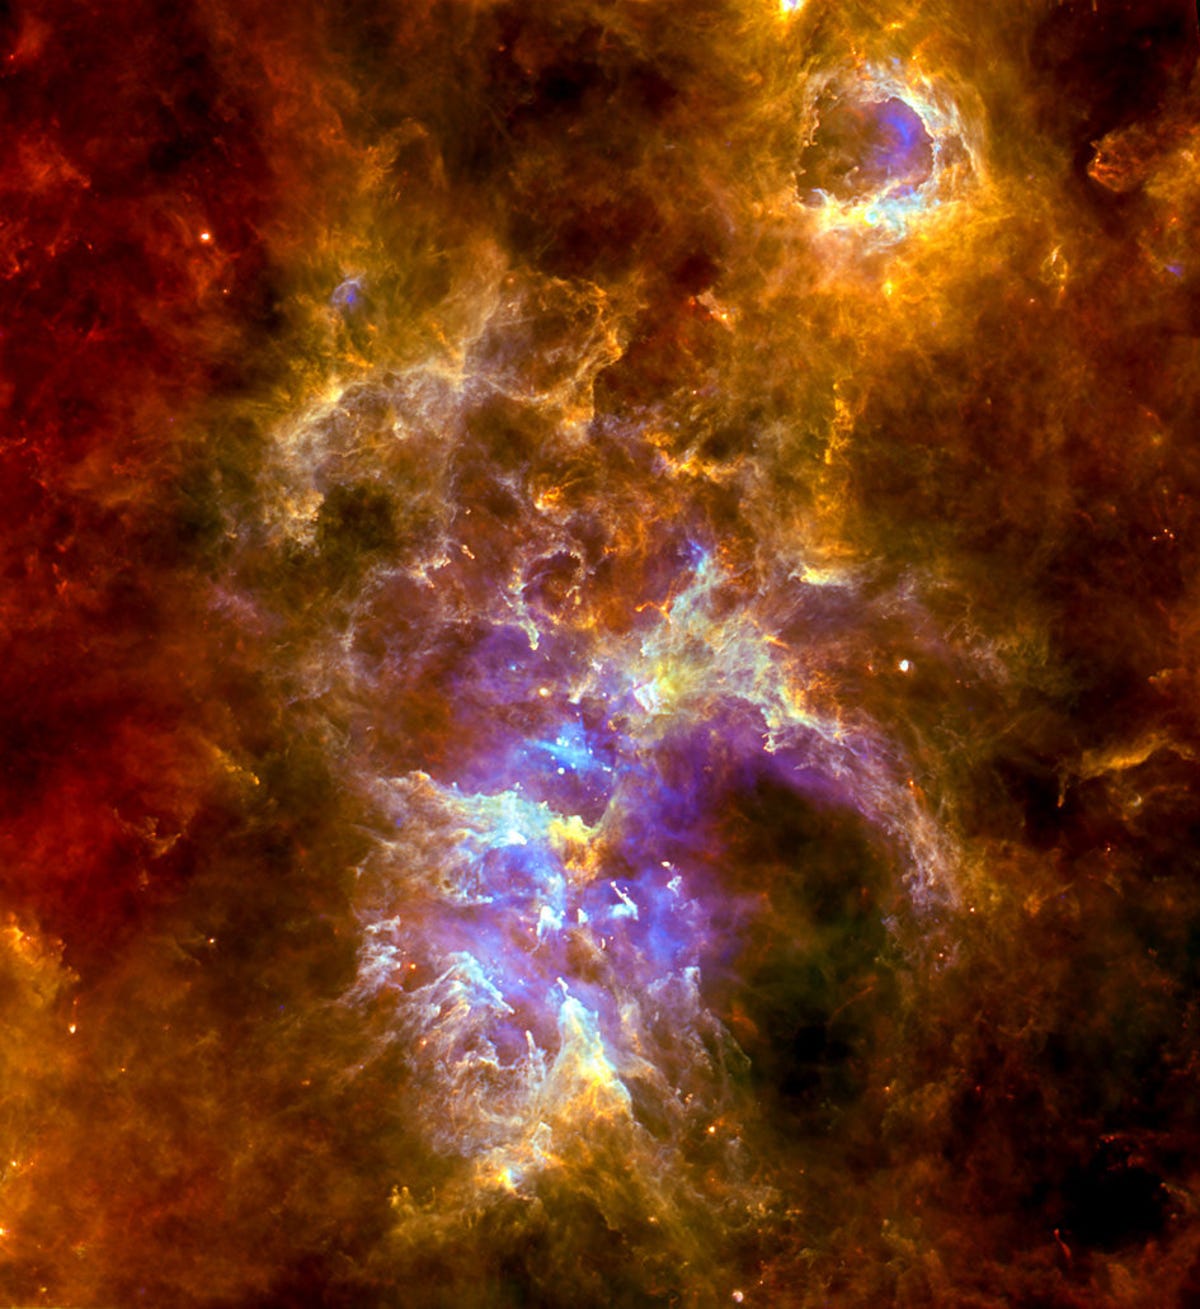 Blowing_bubbles_in_the_Carina_Nebula_fullwidth.jpg